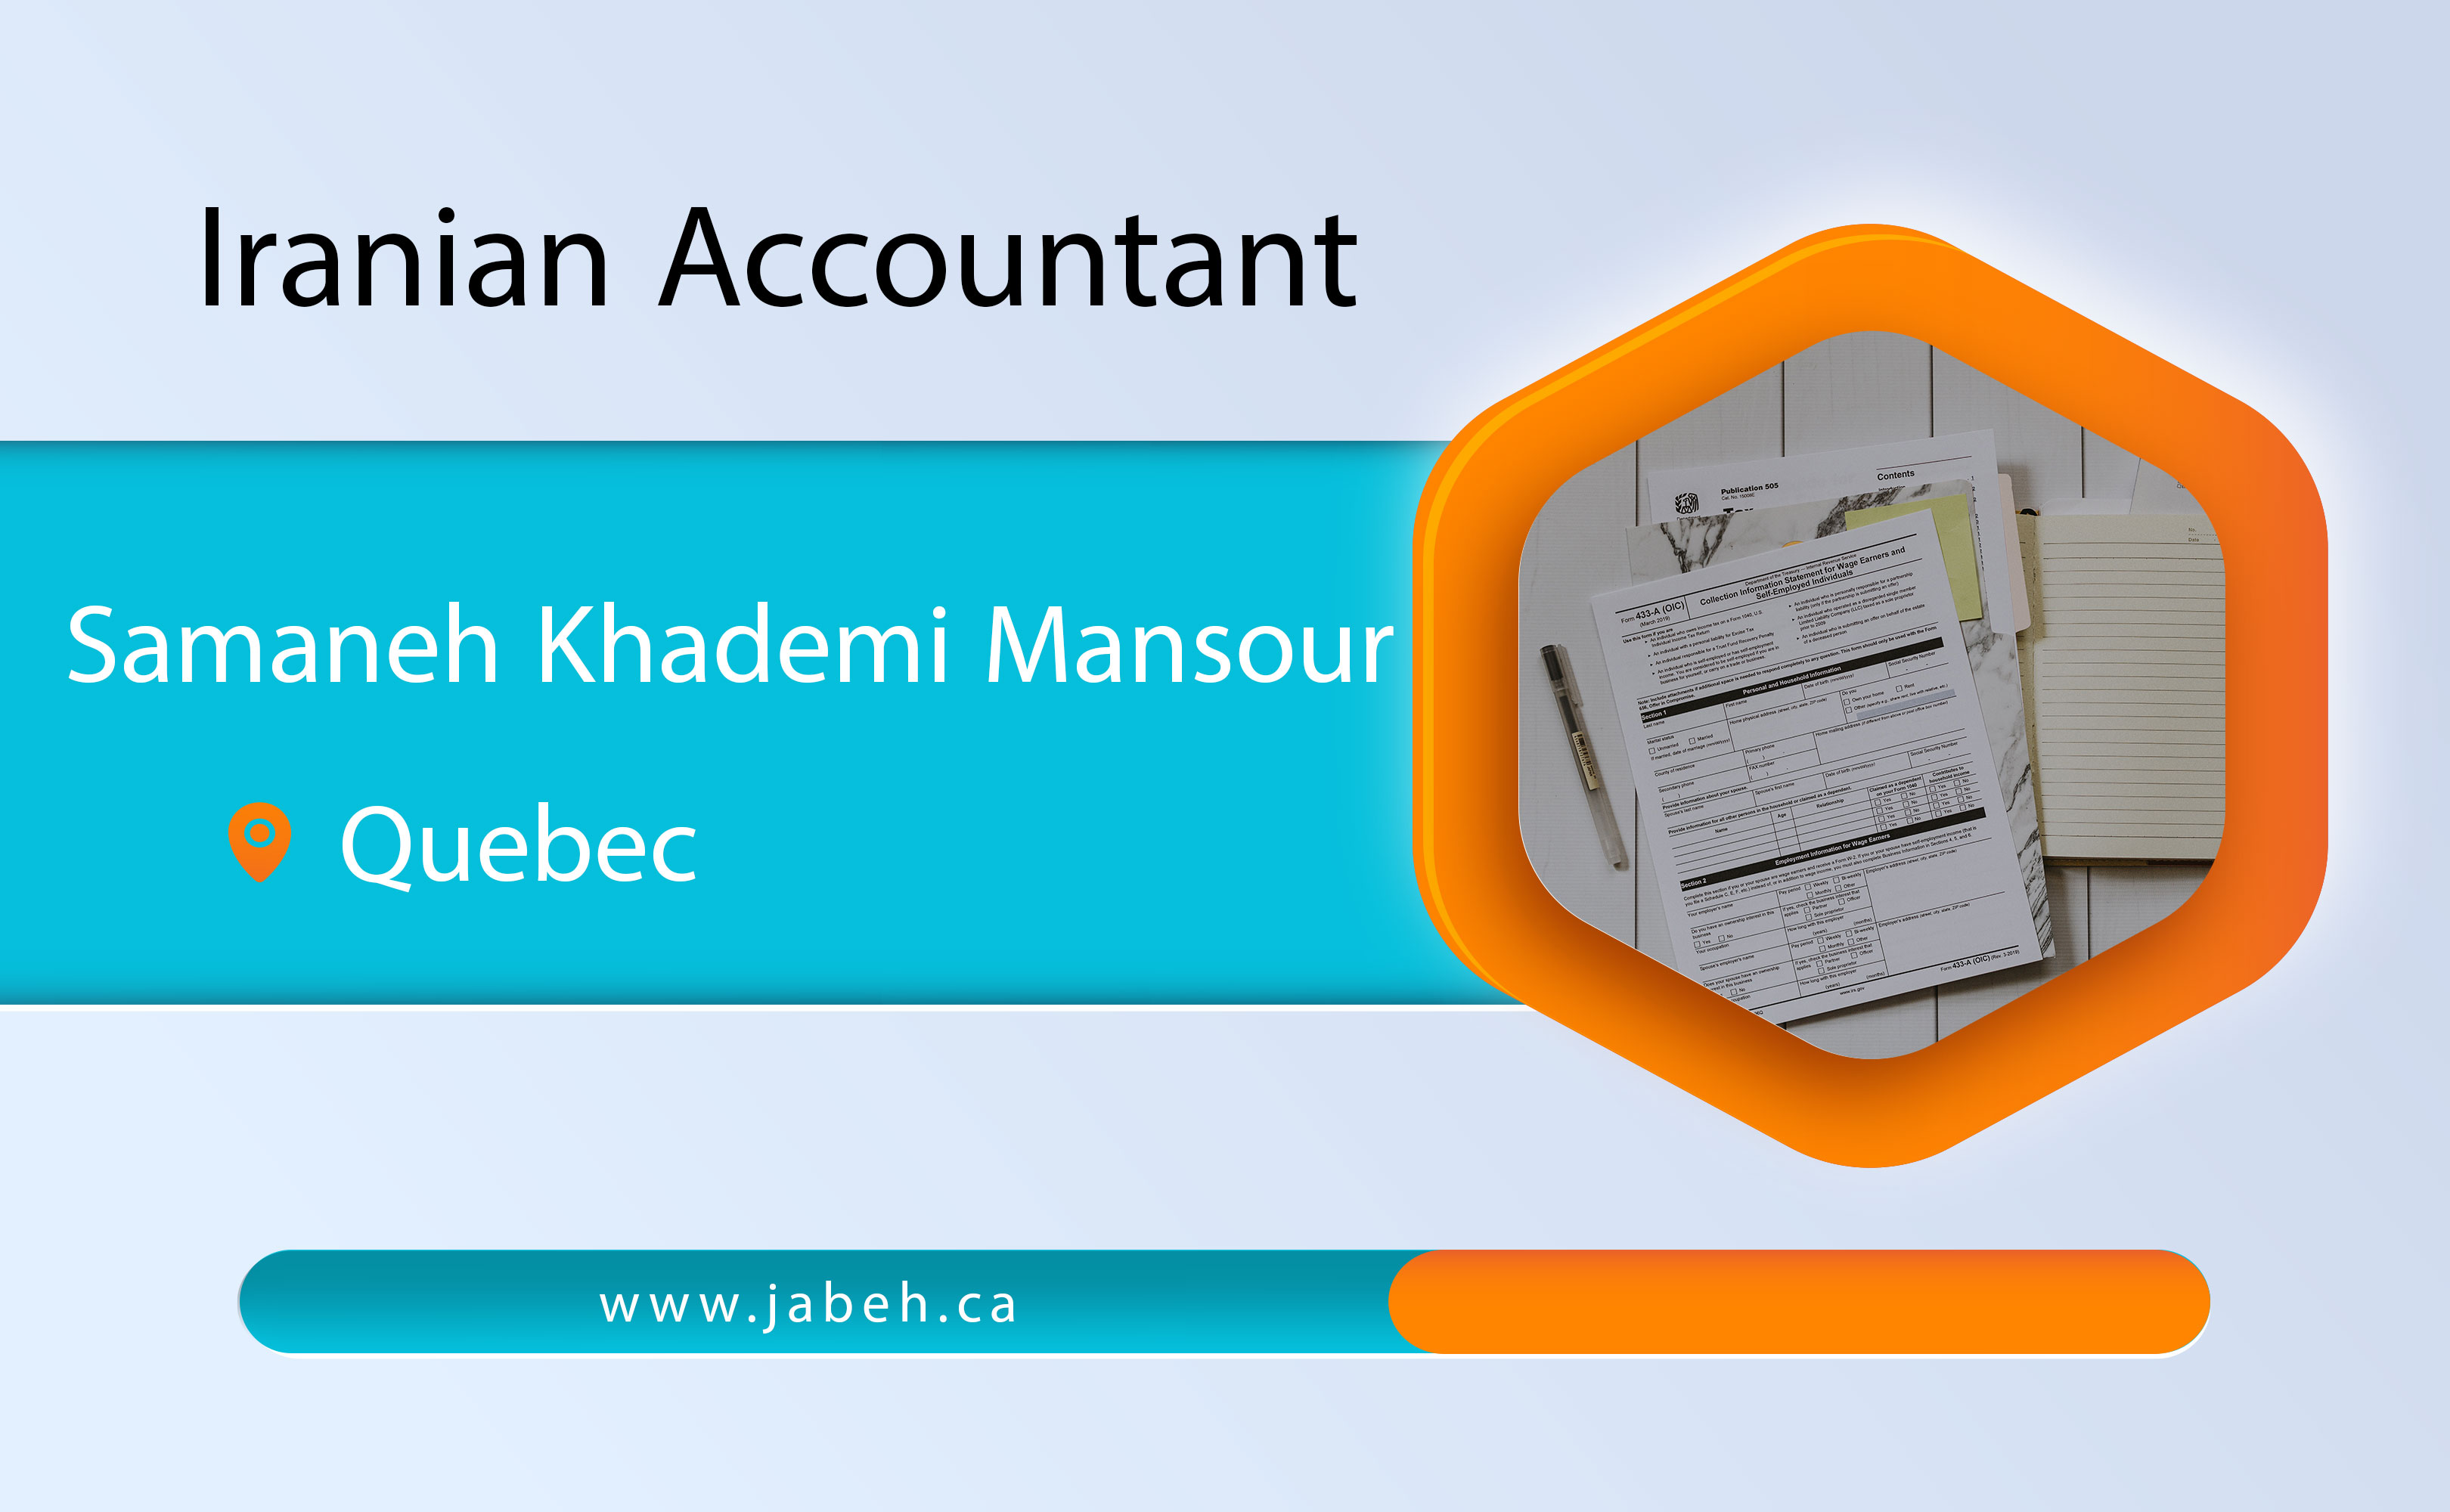 Iranian accountant Samaneh Khademi Mansour in Quebec